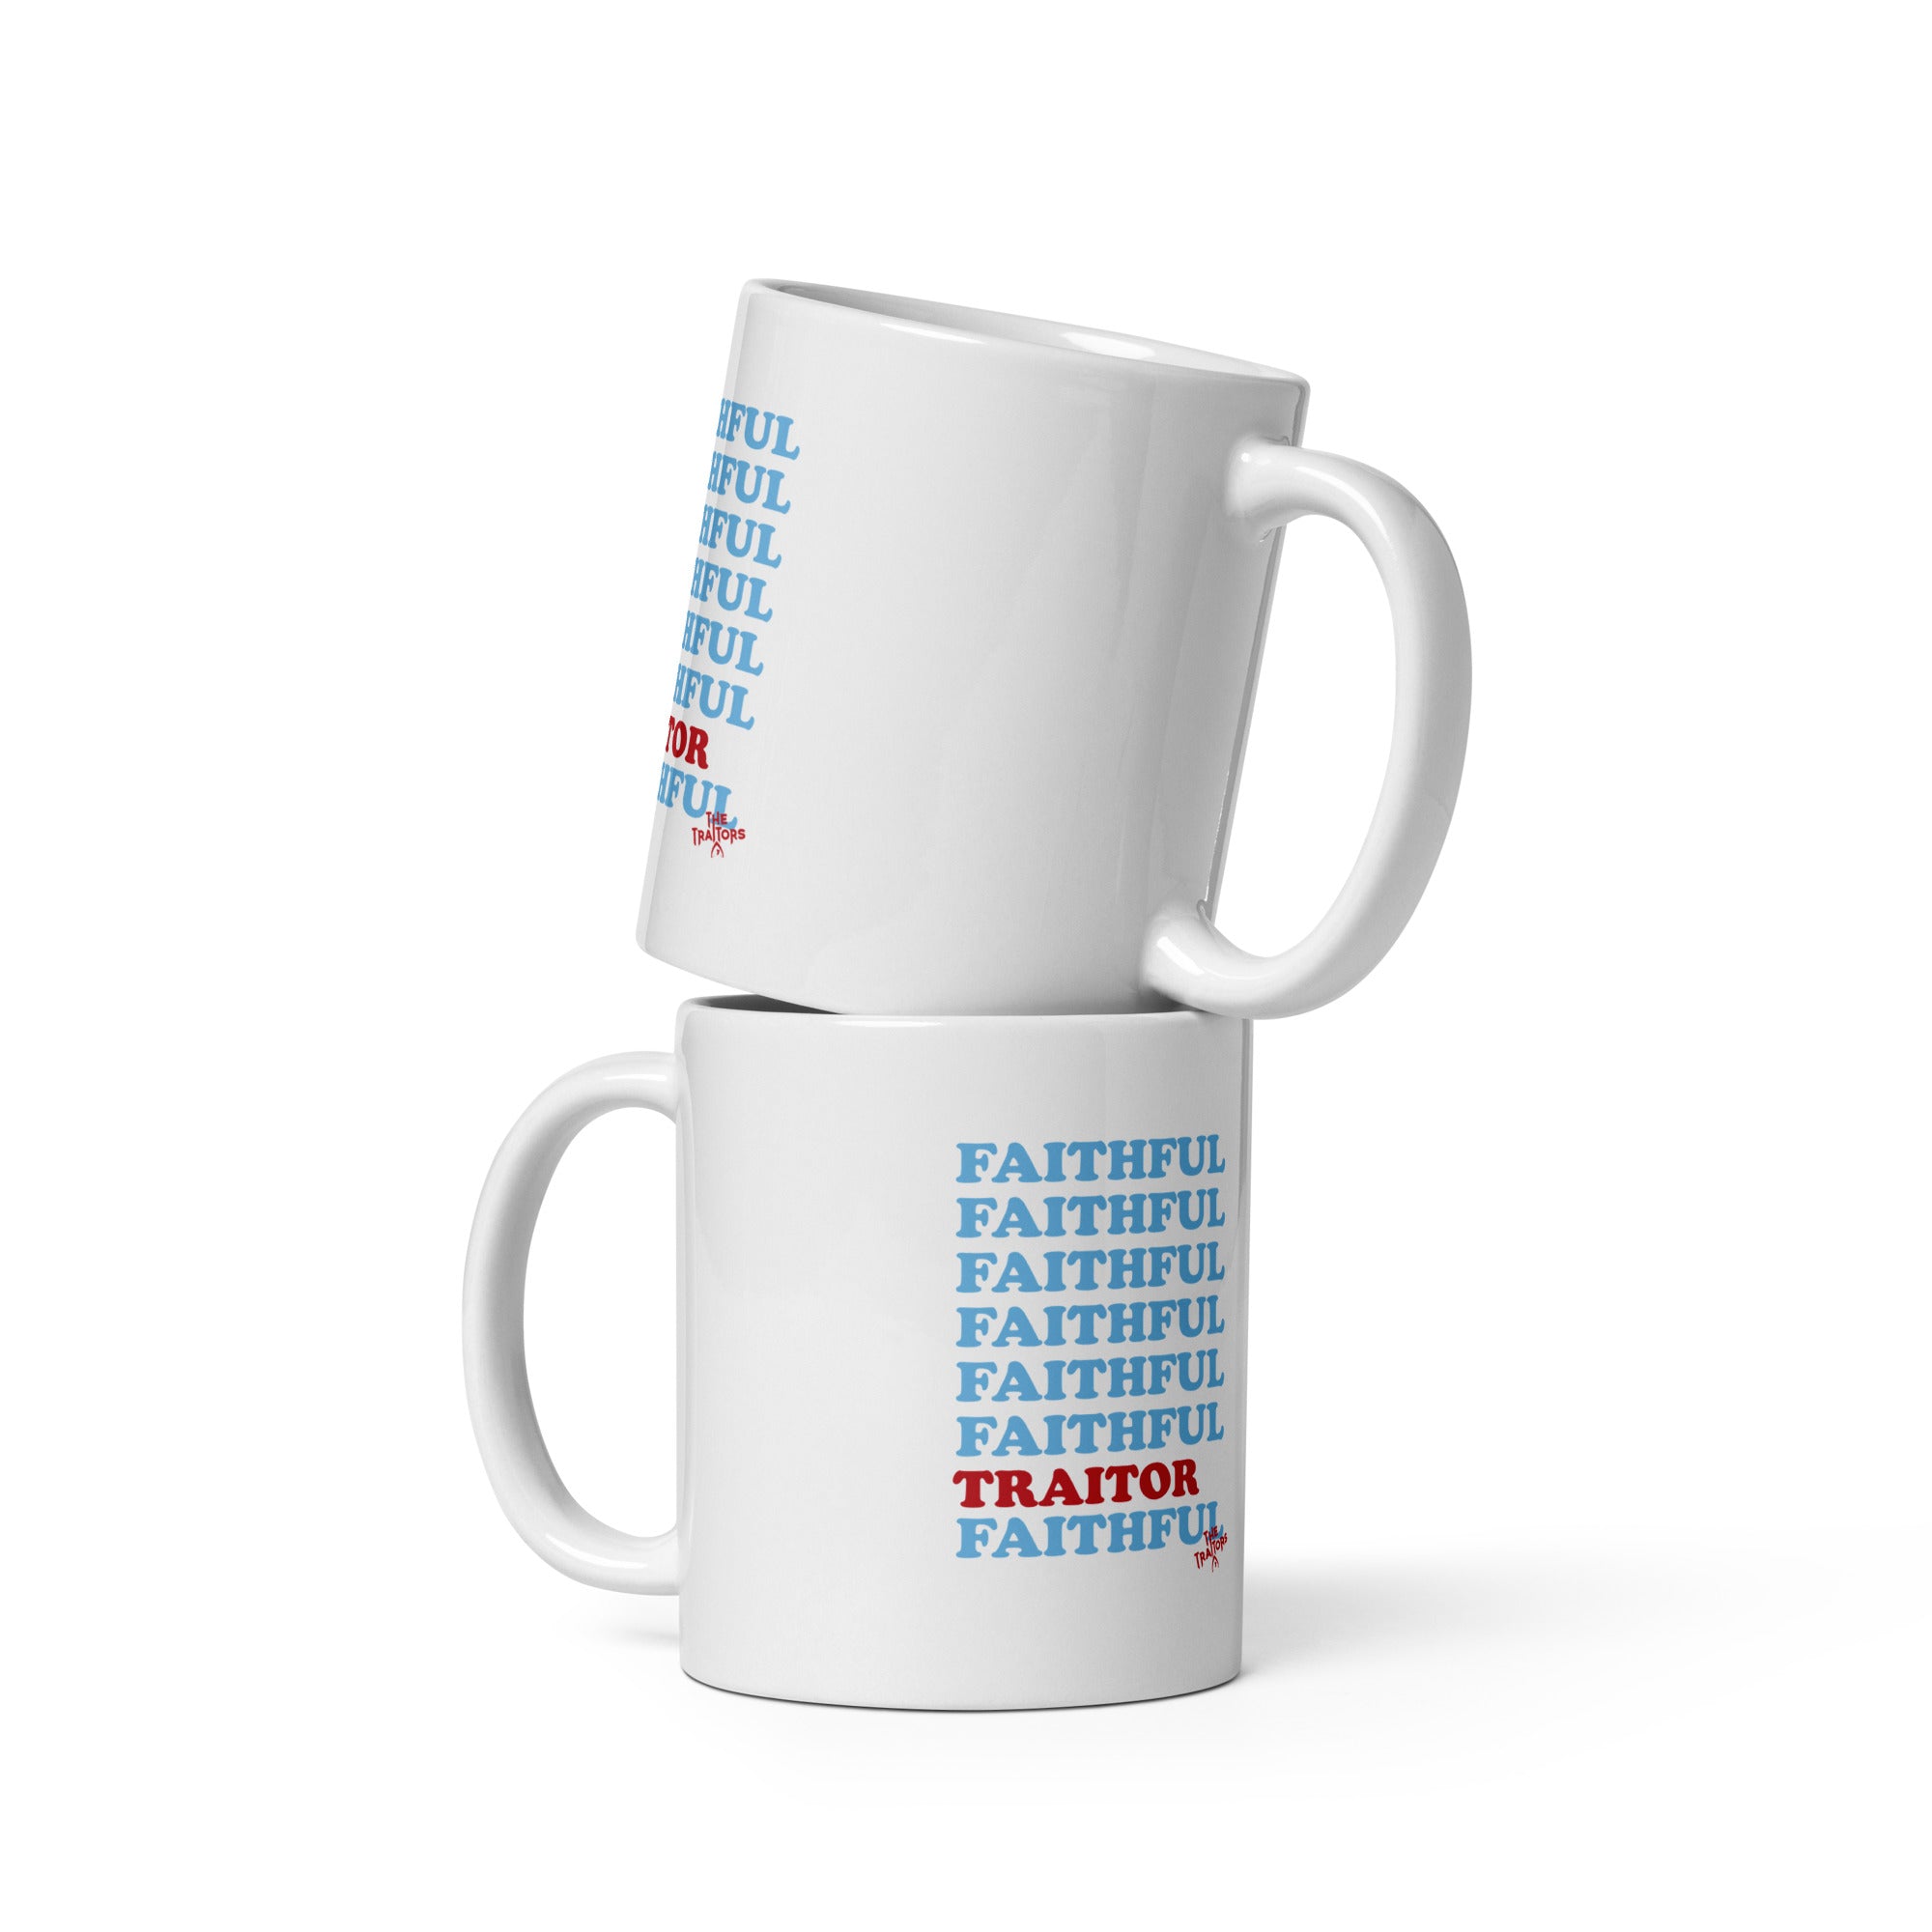 Faithful / Traitor Mug